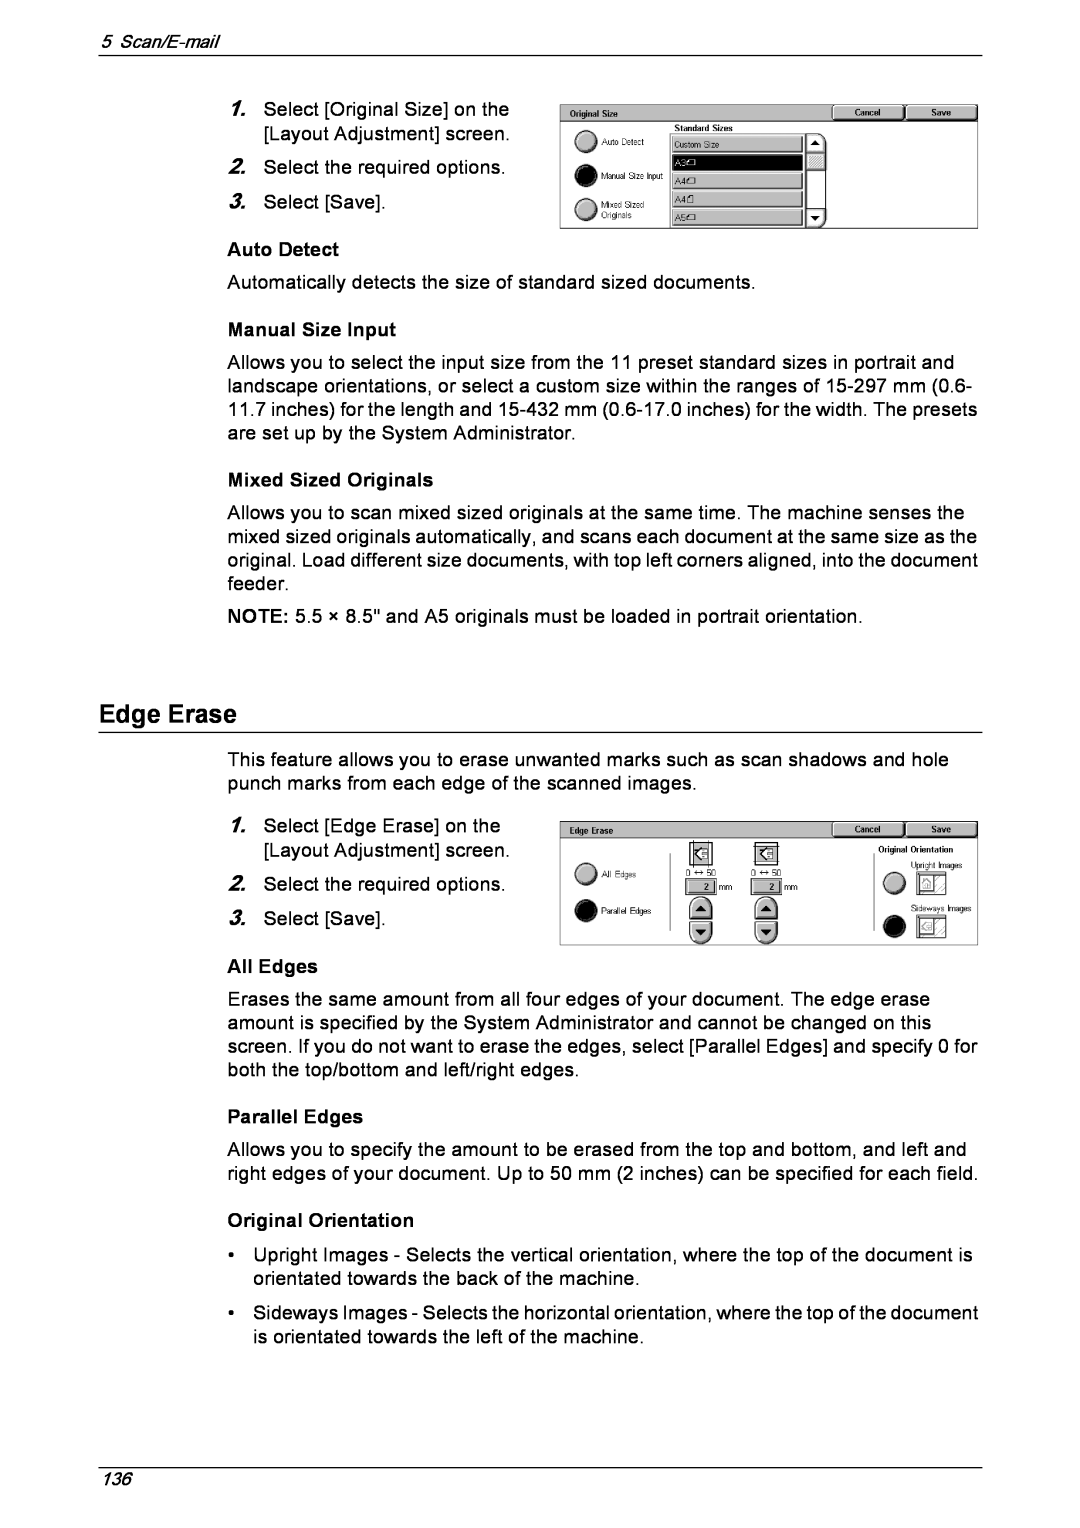 Xerox 5230 manual Original Orientation, Edge Erase, Auto Detect, Manual Size Input, Mixed Sized Originals, All Edges 